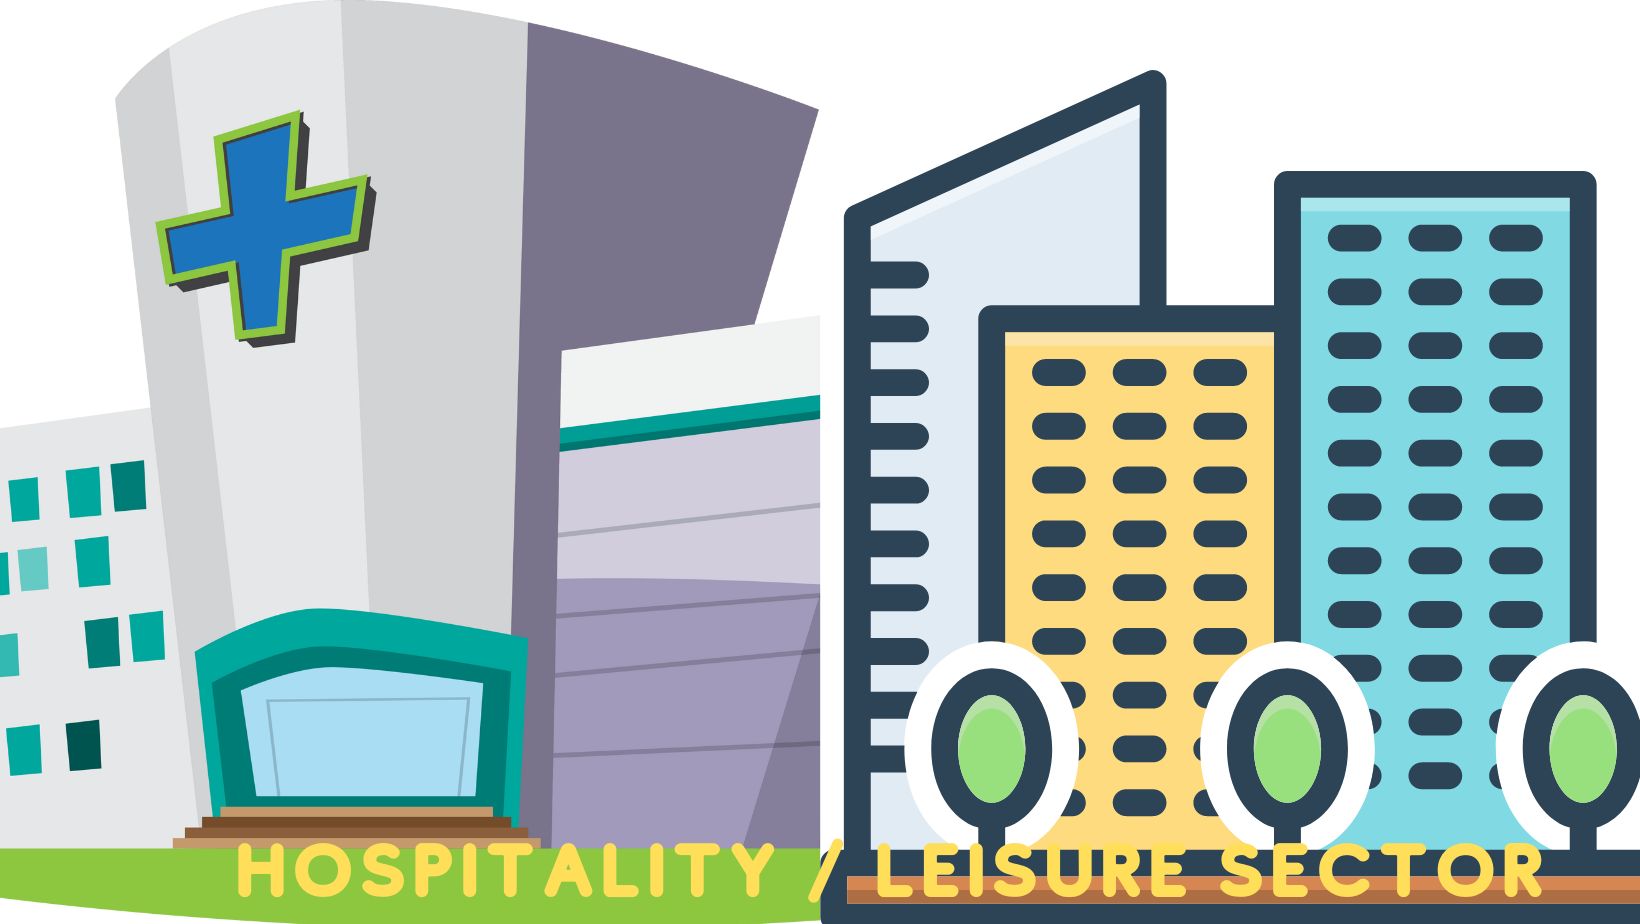 Hospitality / Leisure Sector